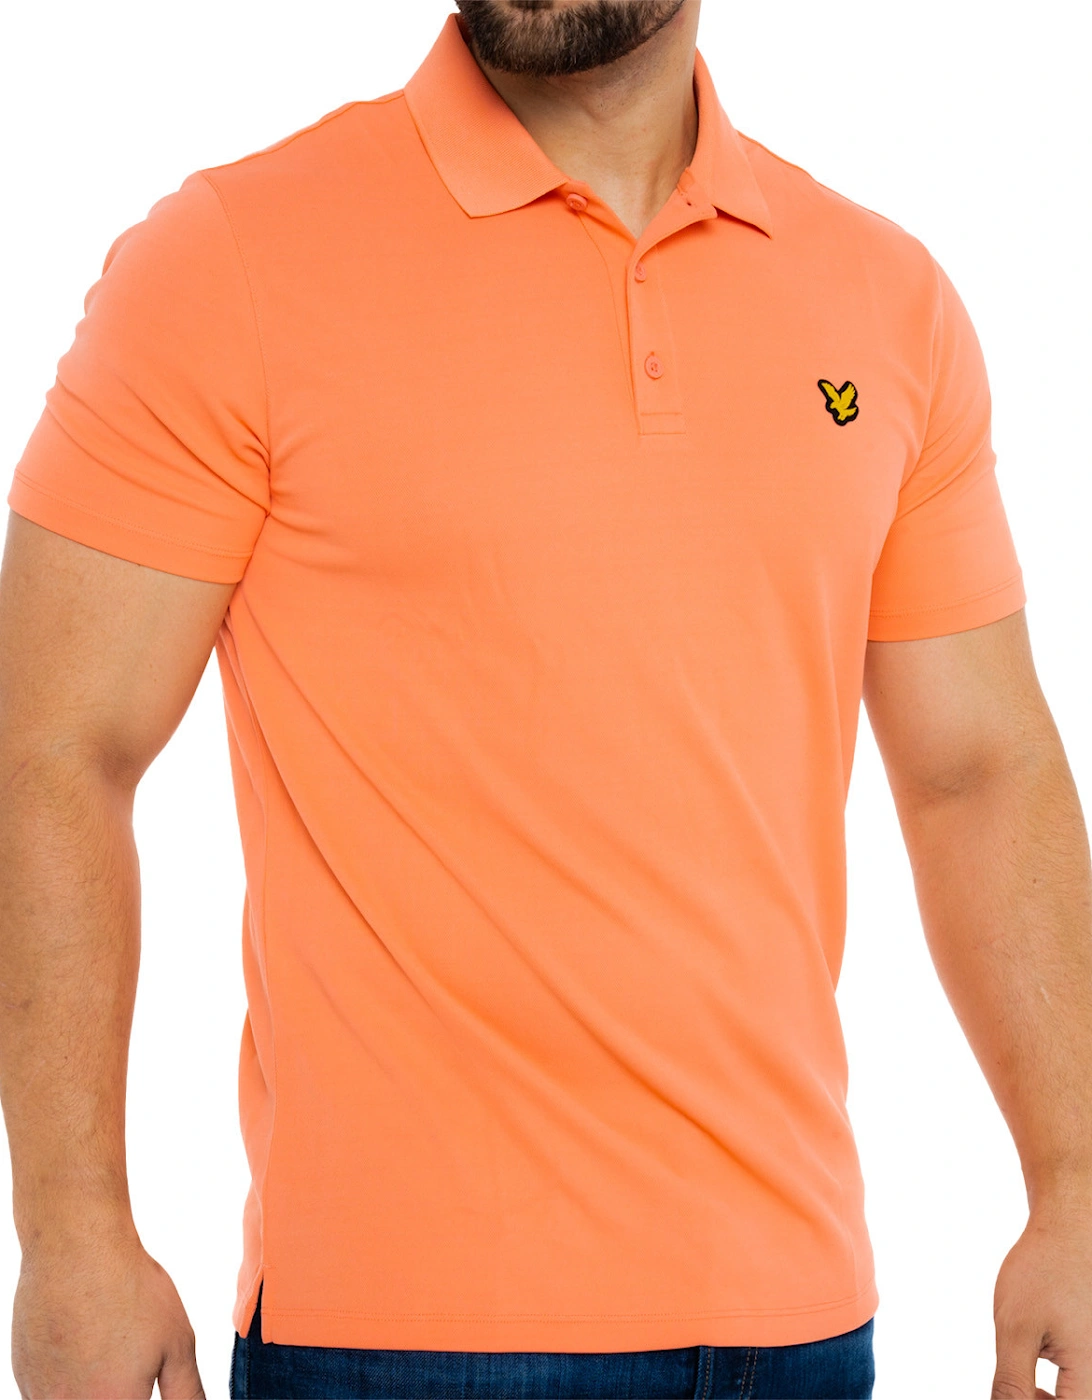 Lyle & Scott Mens Golf Technical Polo Shirt (Coral)